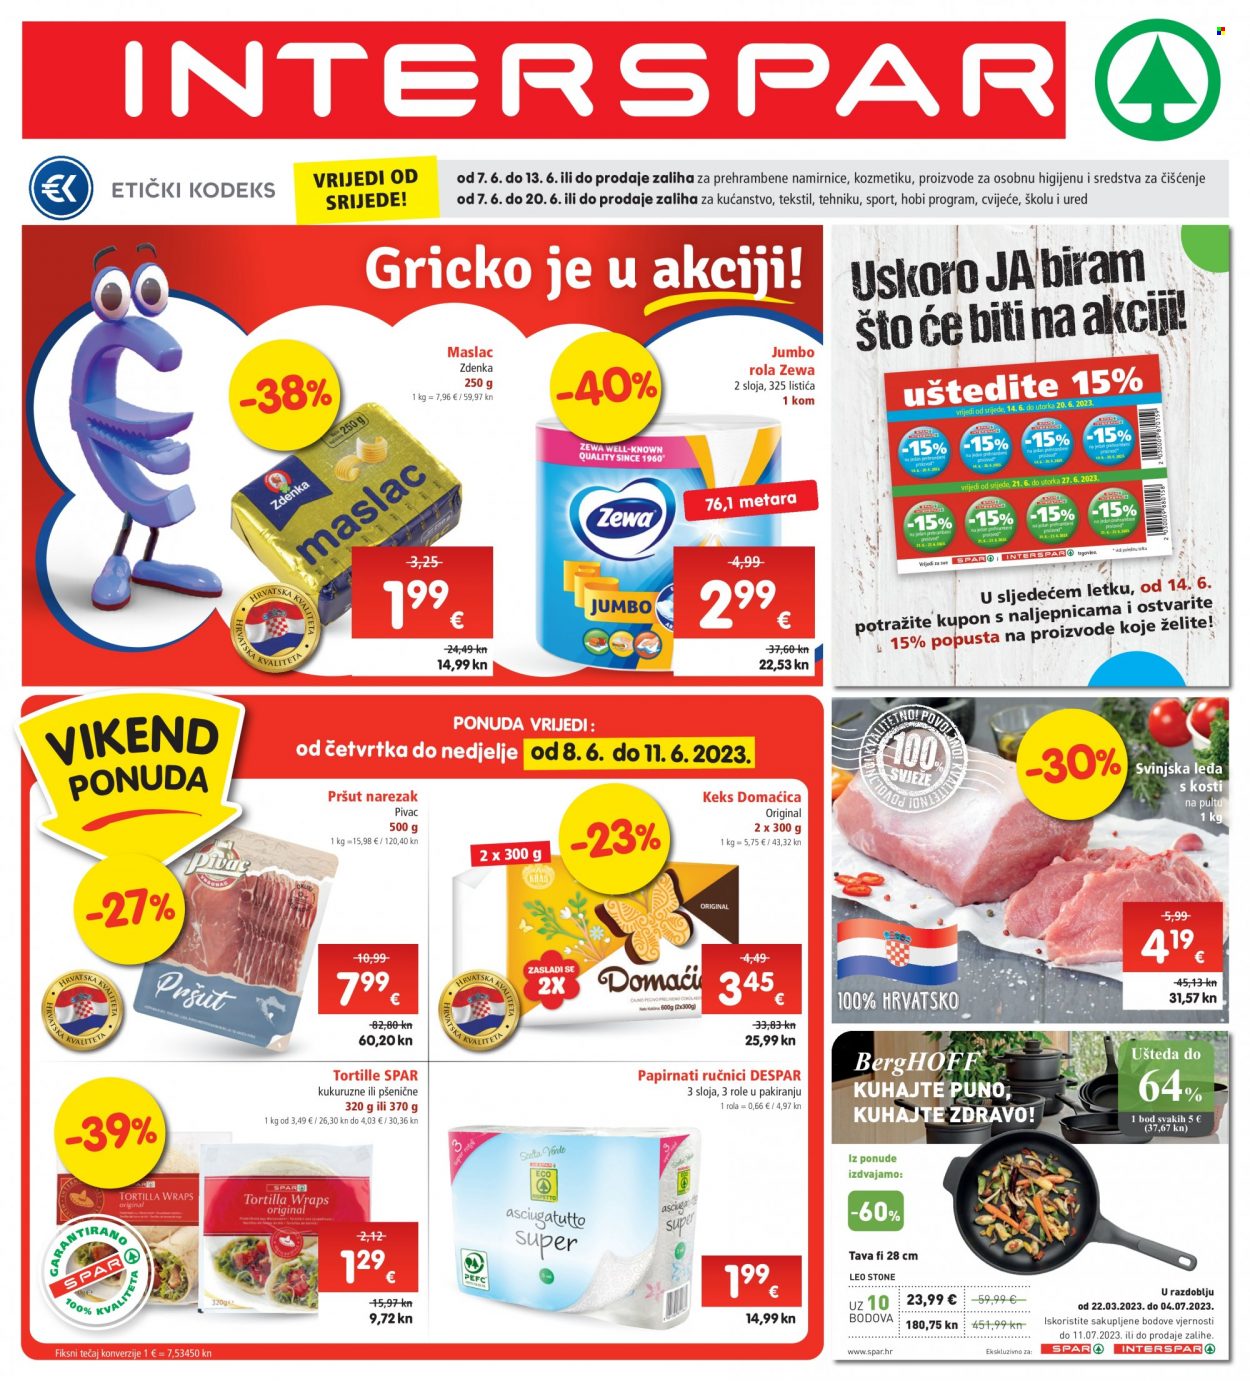 INTERSPAR katalog - 07.06.2023. - 13.06.2023.